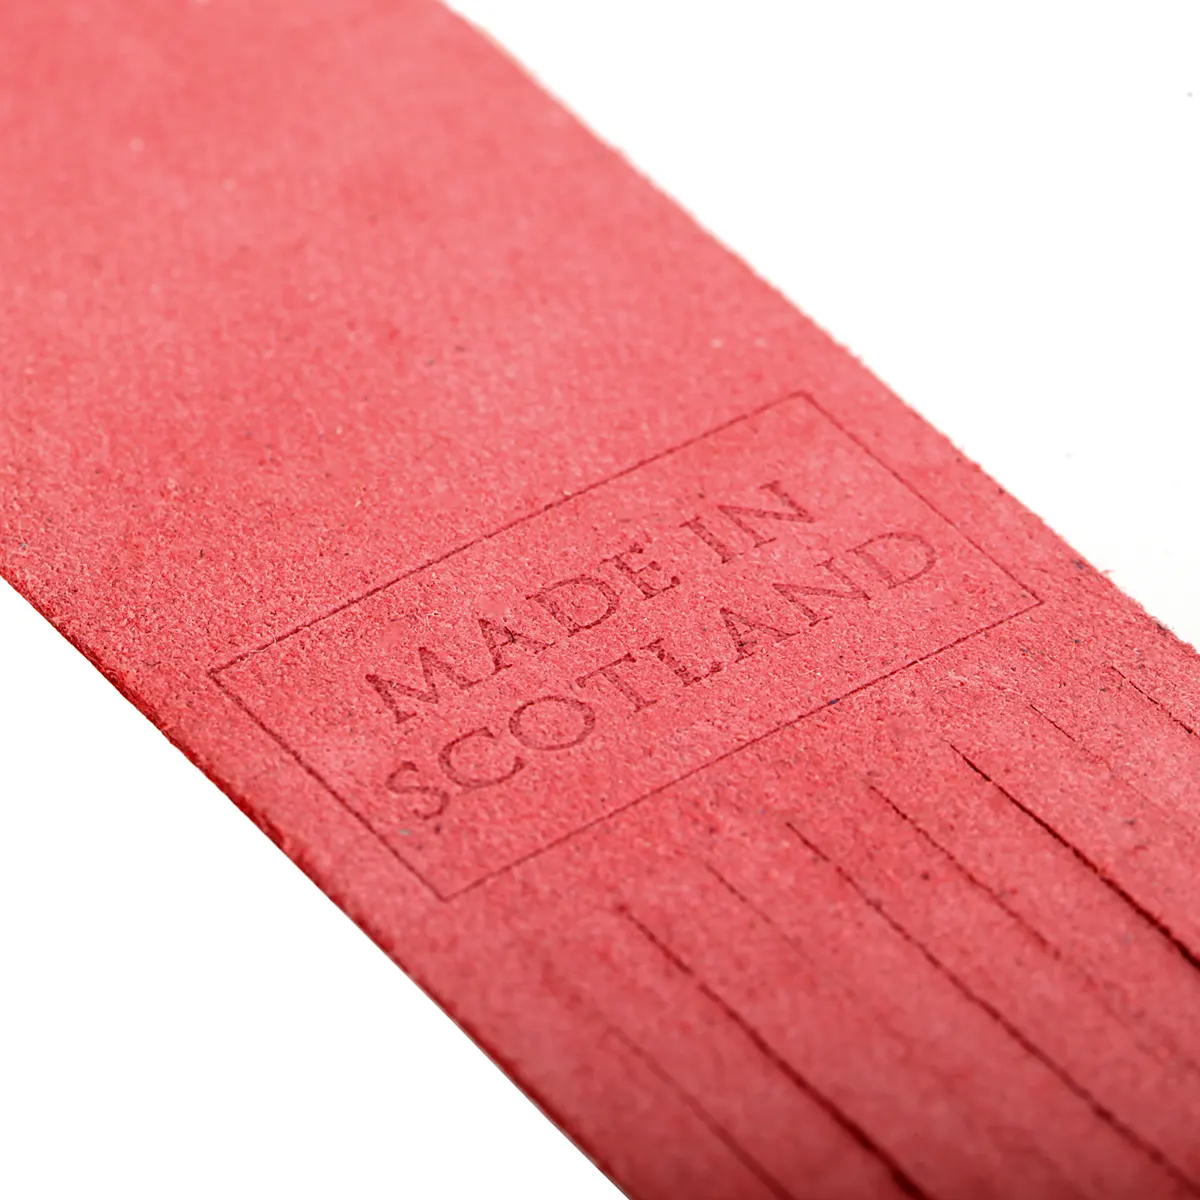 John o' Groats - Lesezeichen aus Leder in Rot - Made in Scotland